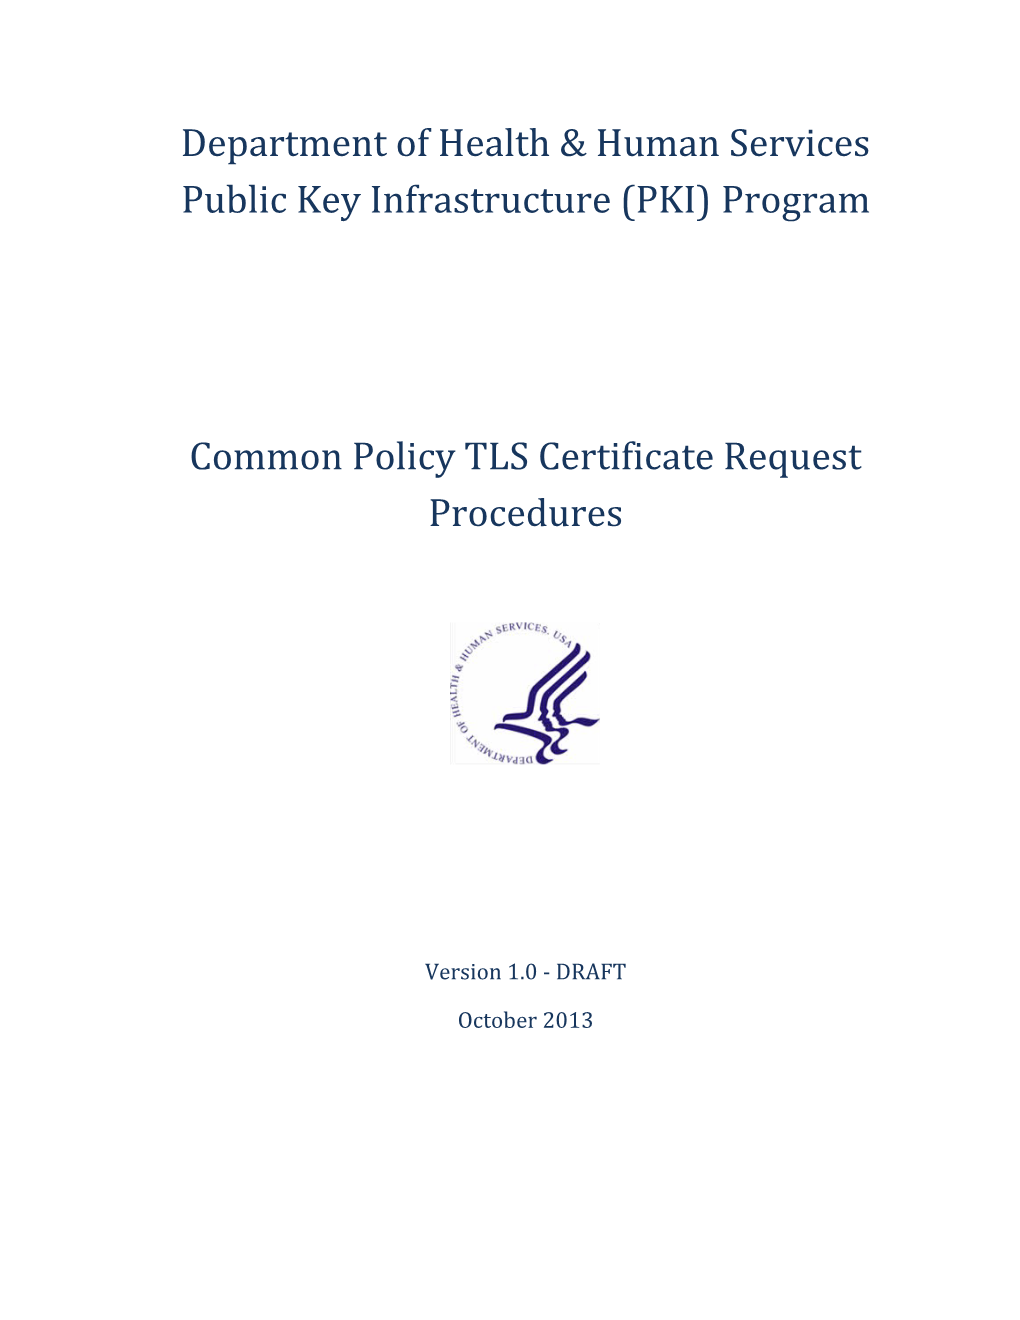 HHS PKI Program Common Policy TLS Certificate Request Procedures